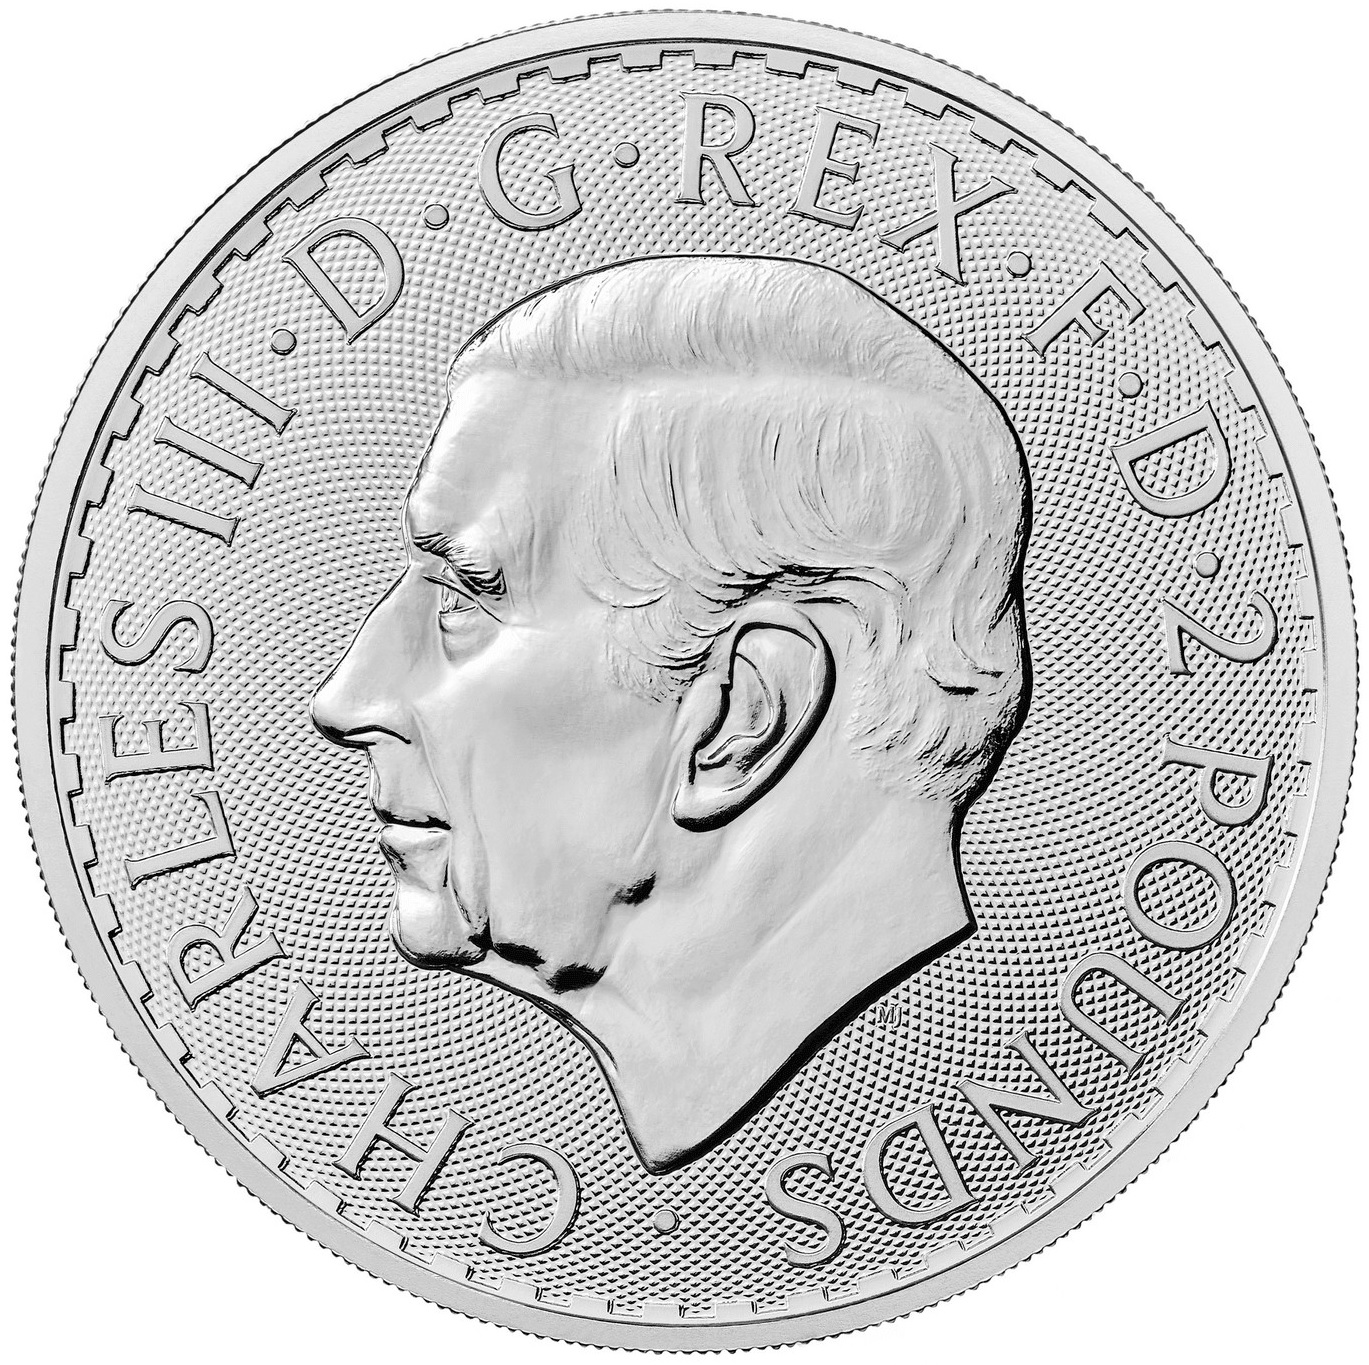 1 oz. Silver Britannia bullion coin - obverse side